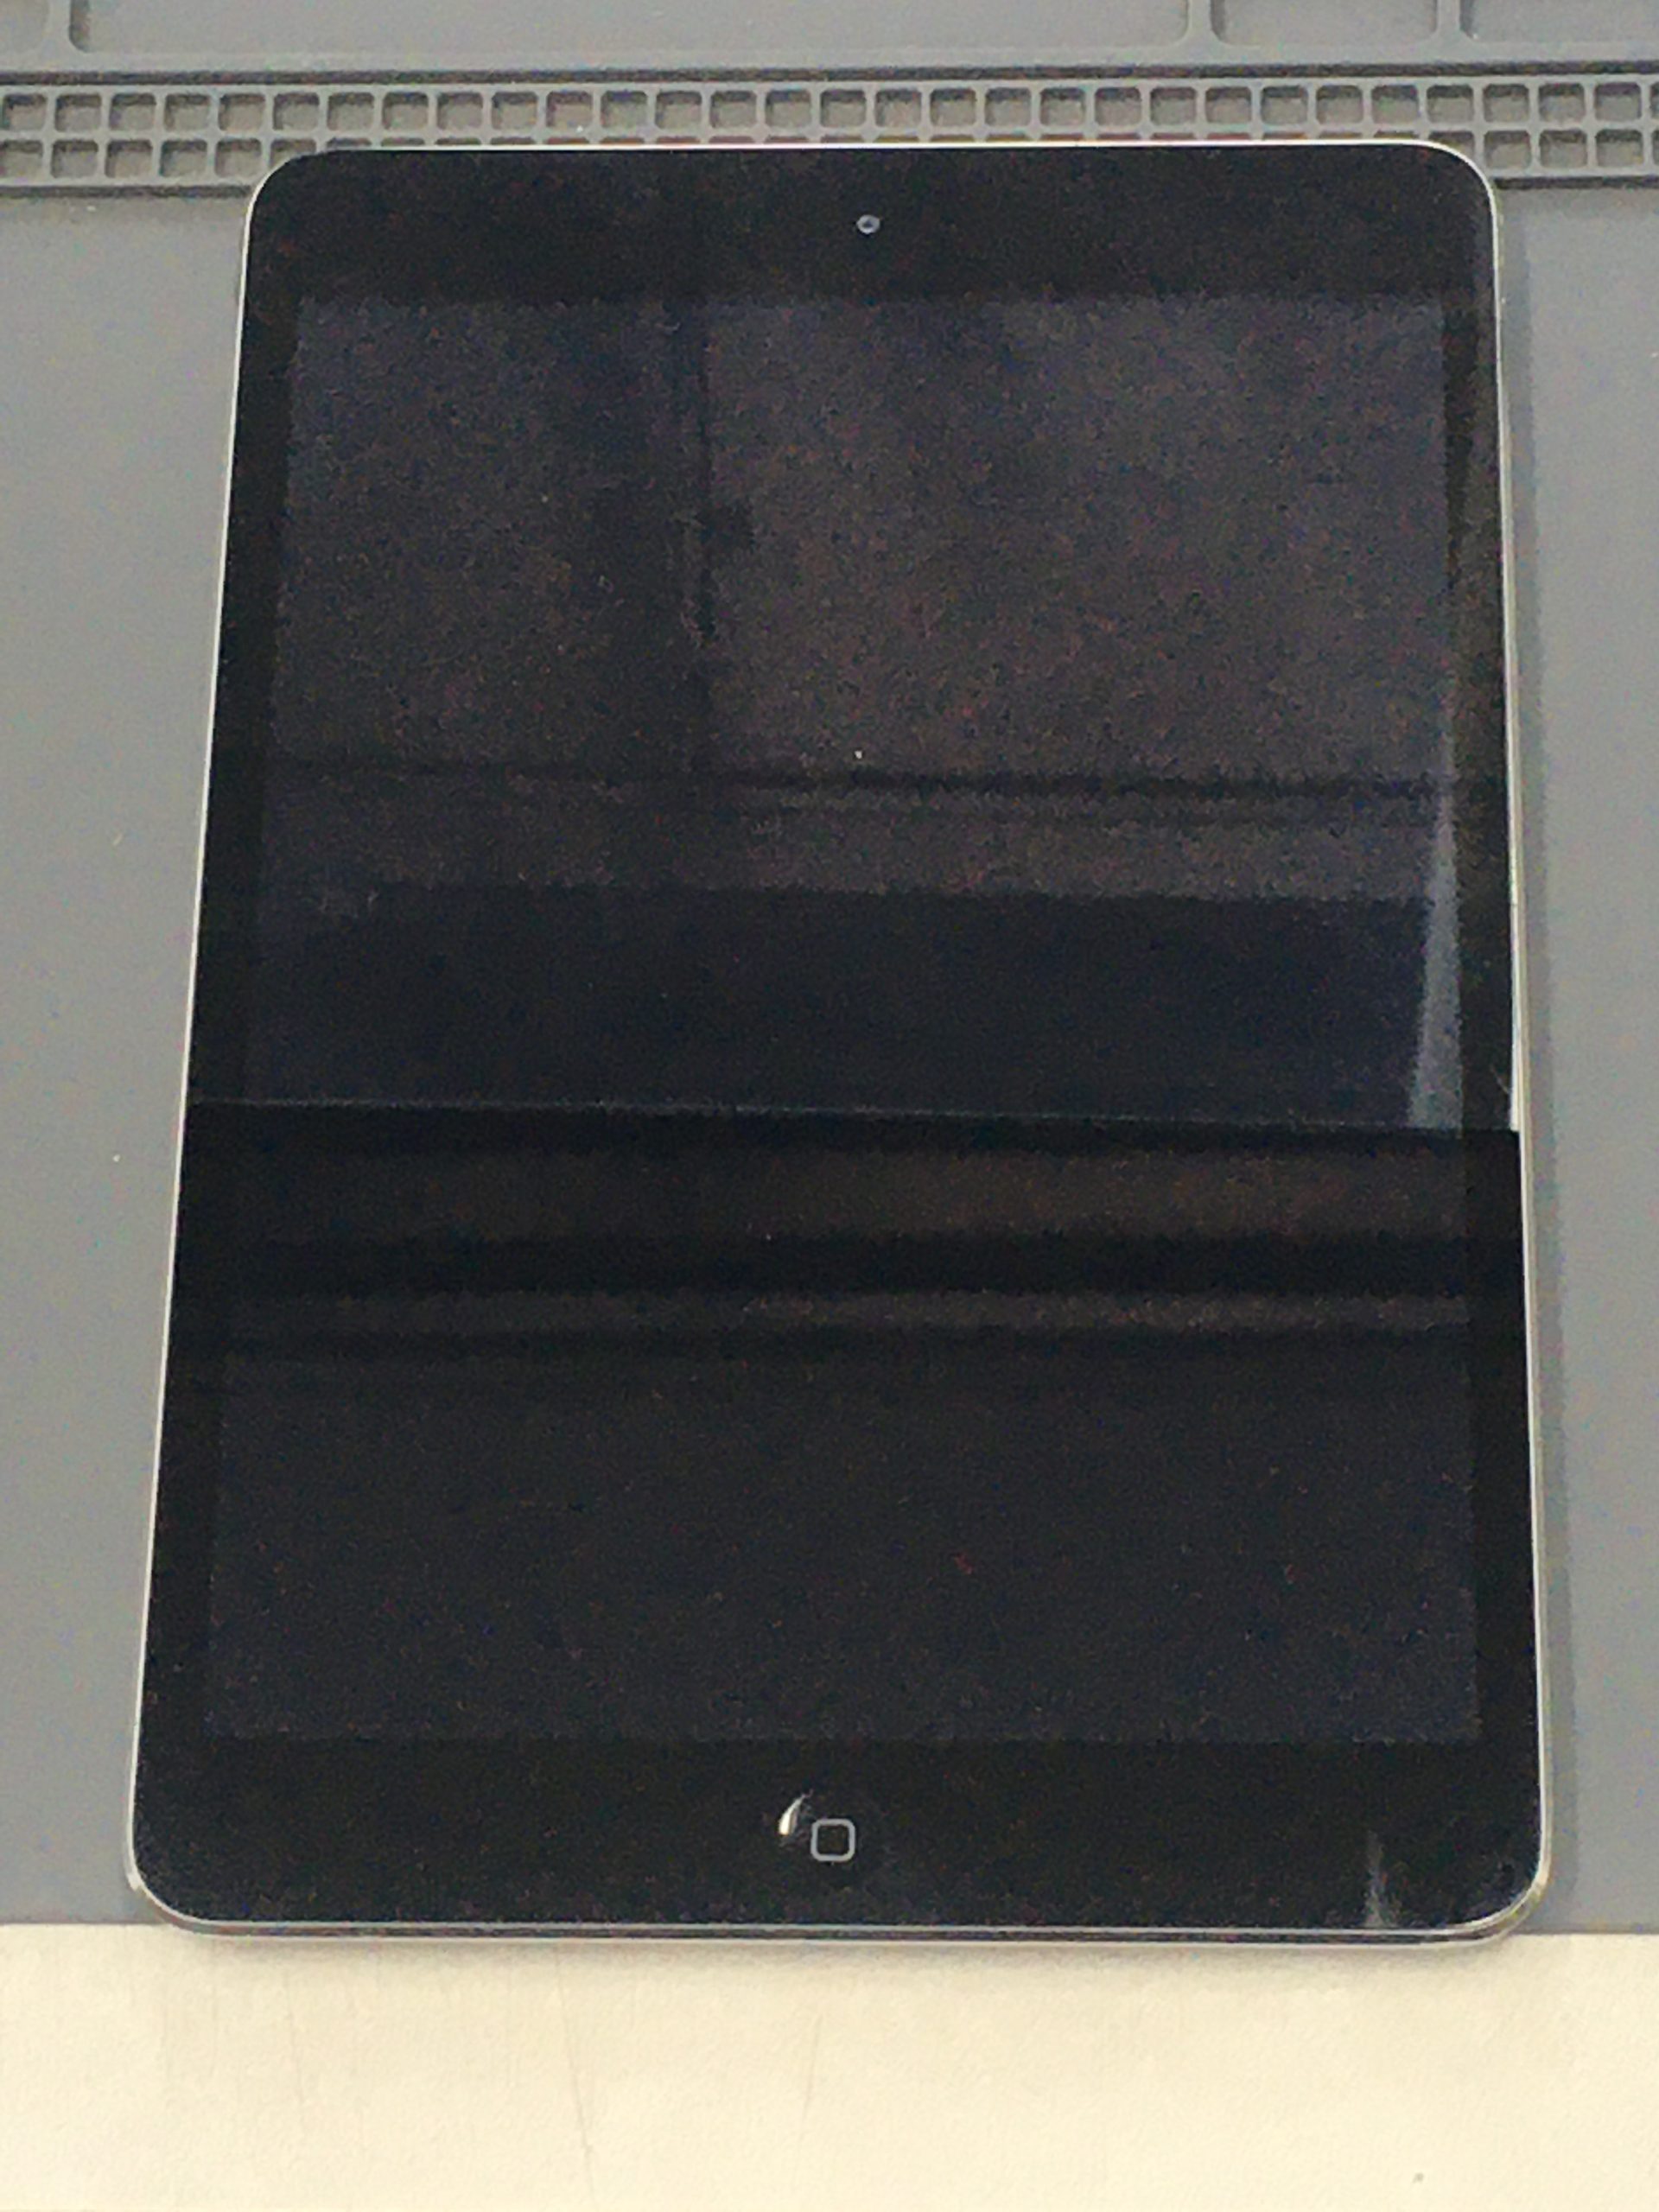 iPadmini2 wifiモデル 16GB シルバー 中古 【練馬】